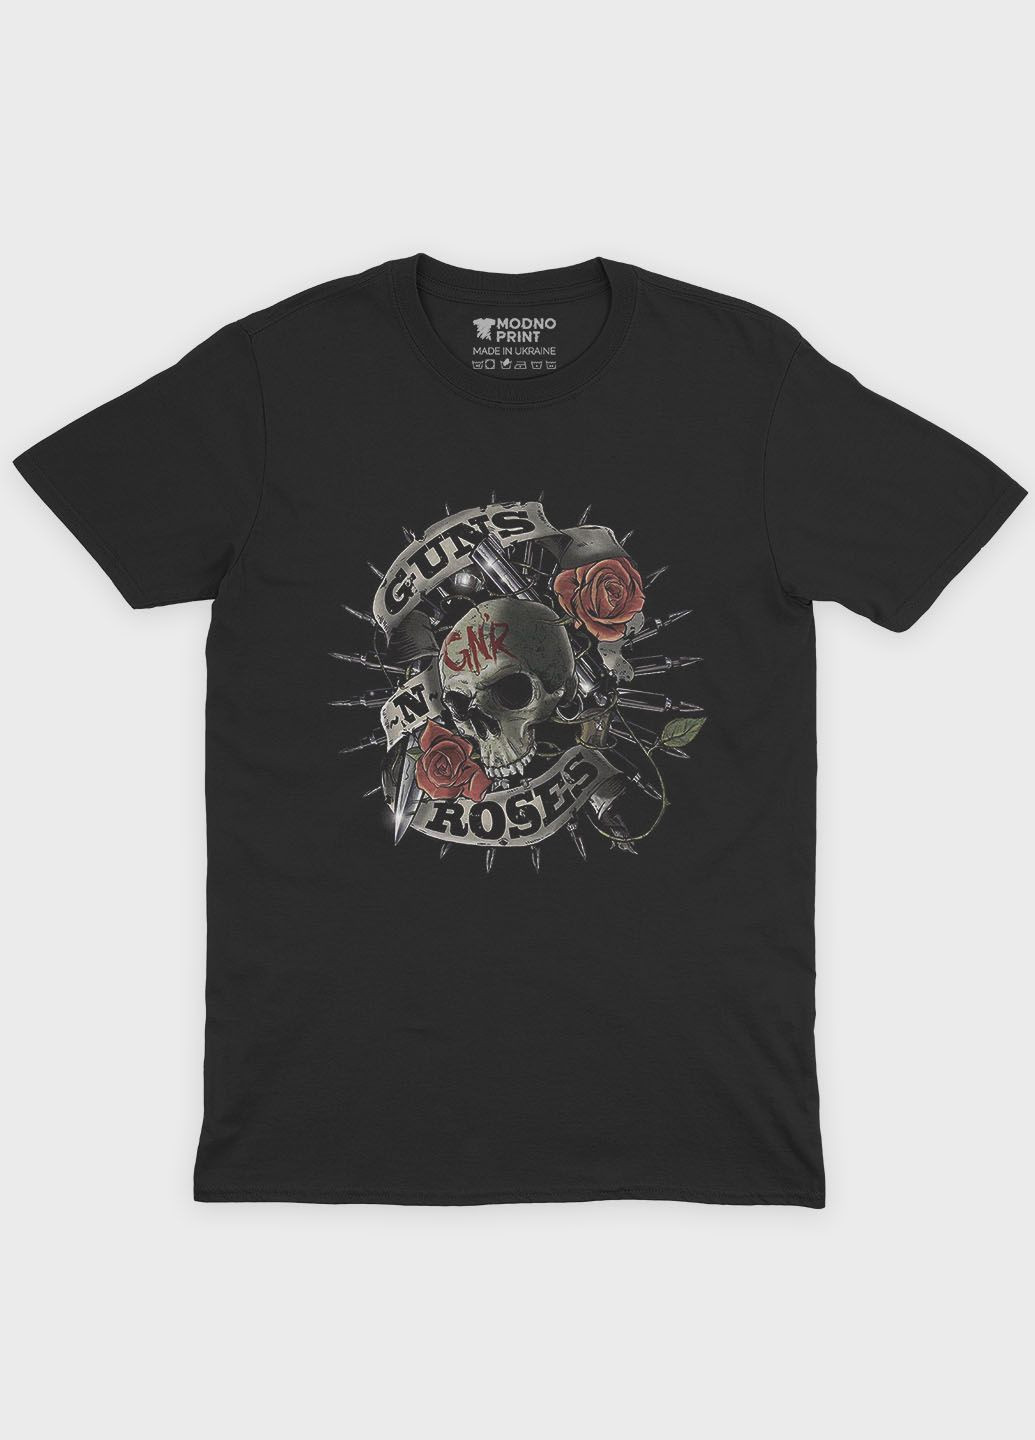 Черная летняя женская футболка с рок принтом "guns n roses" (ts001-1-bl-004-2-121-f) Modno